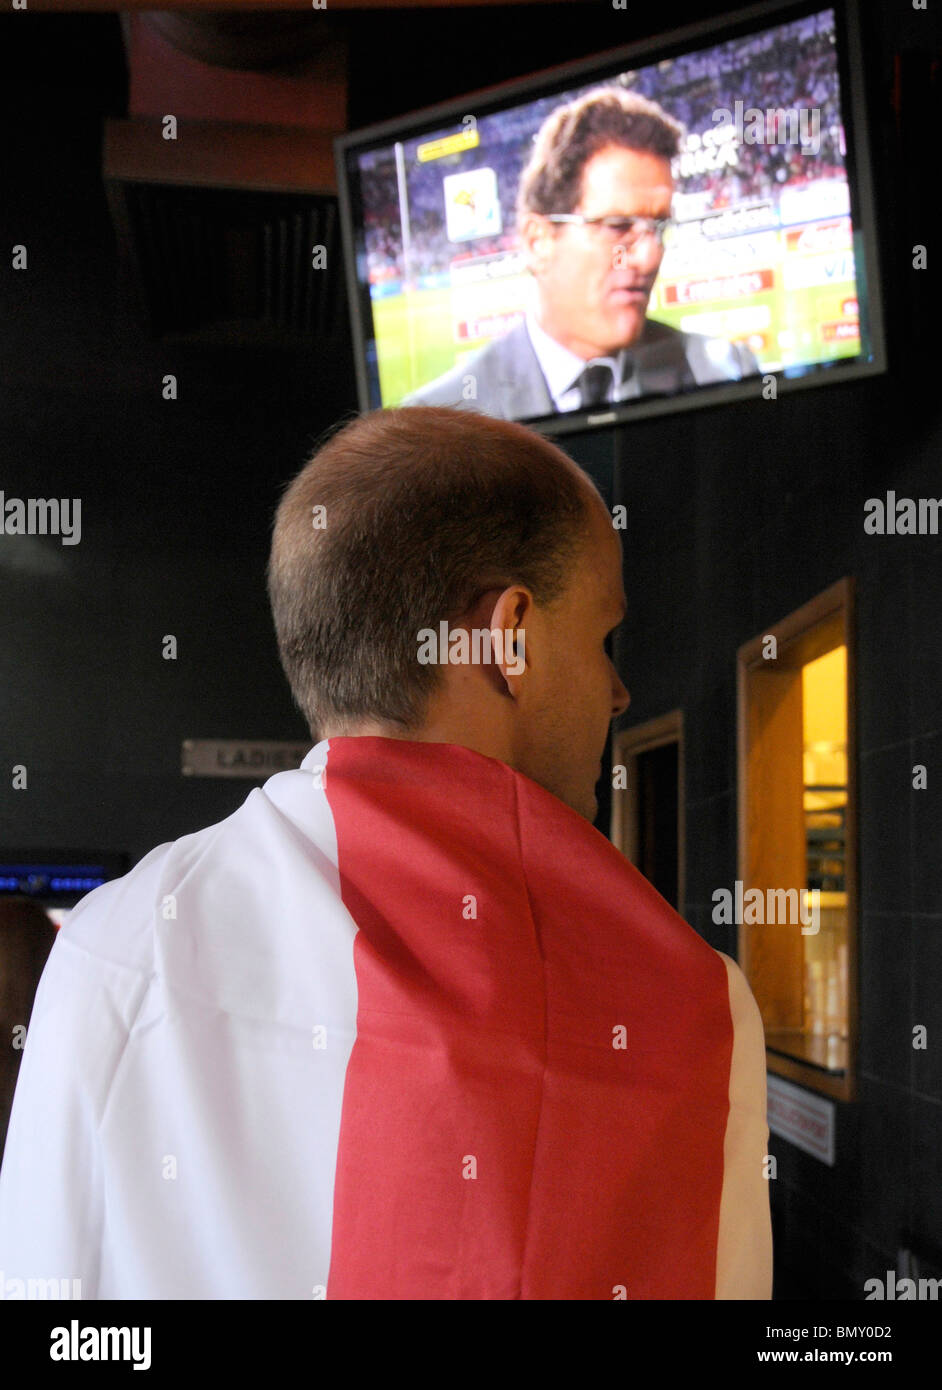 SÜDAFRIKA FUßBALL-WM 2010 ENGLAND SUPPORTER BEOBACHTEN SPIEL AM TV ST. GEORGS-FLAGGE IN LONDON Stockfoto